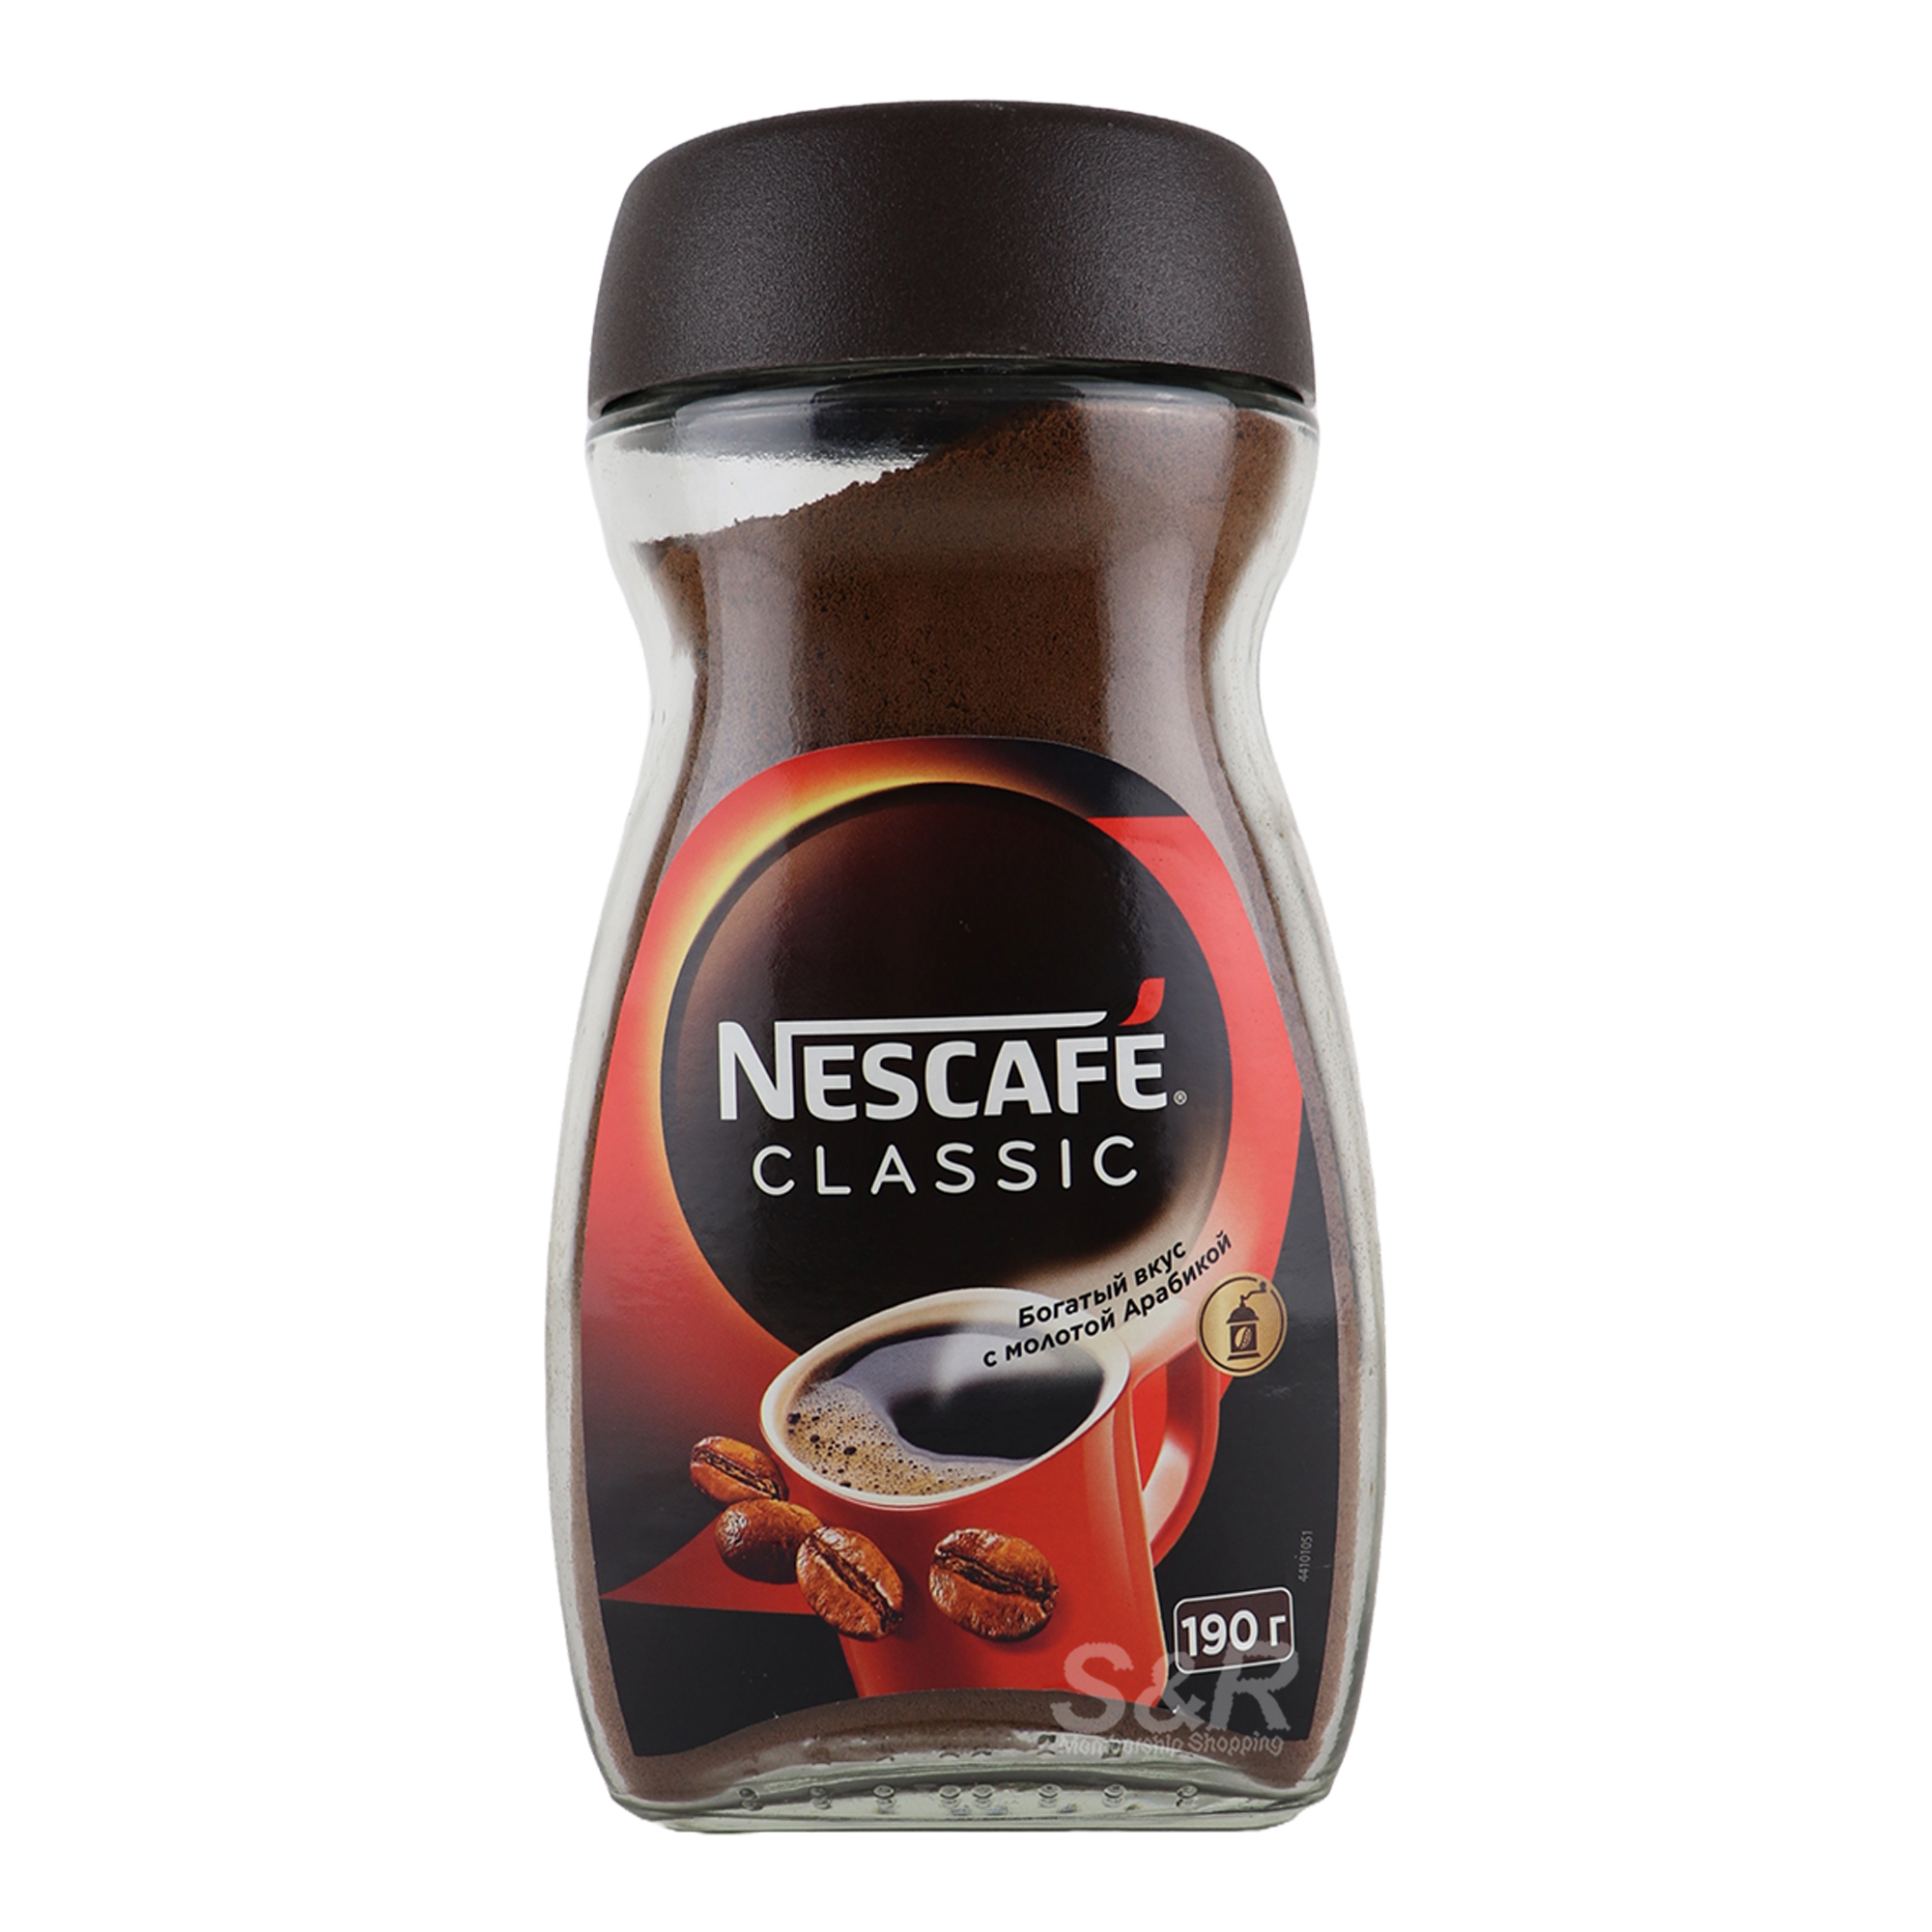 Nescafe Classic Instant Coffee 190g